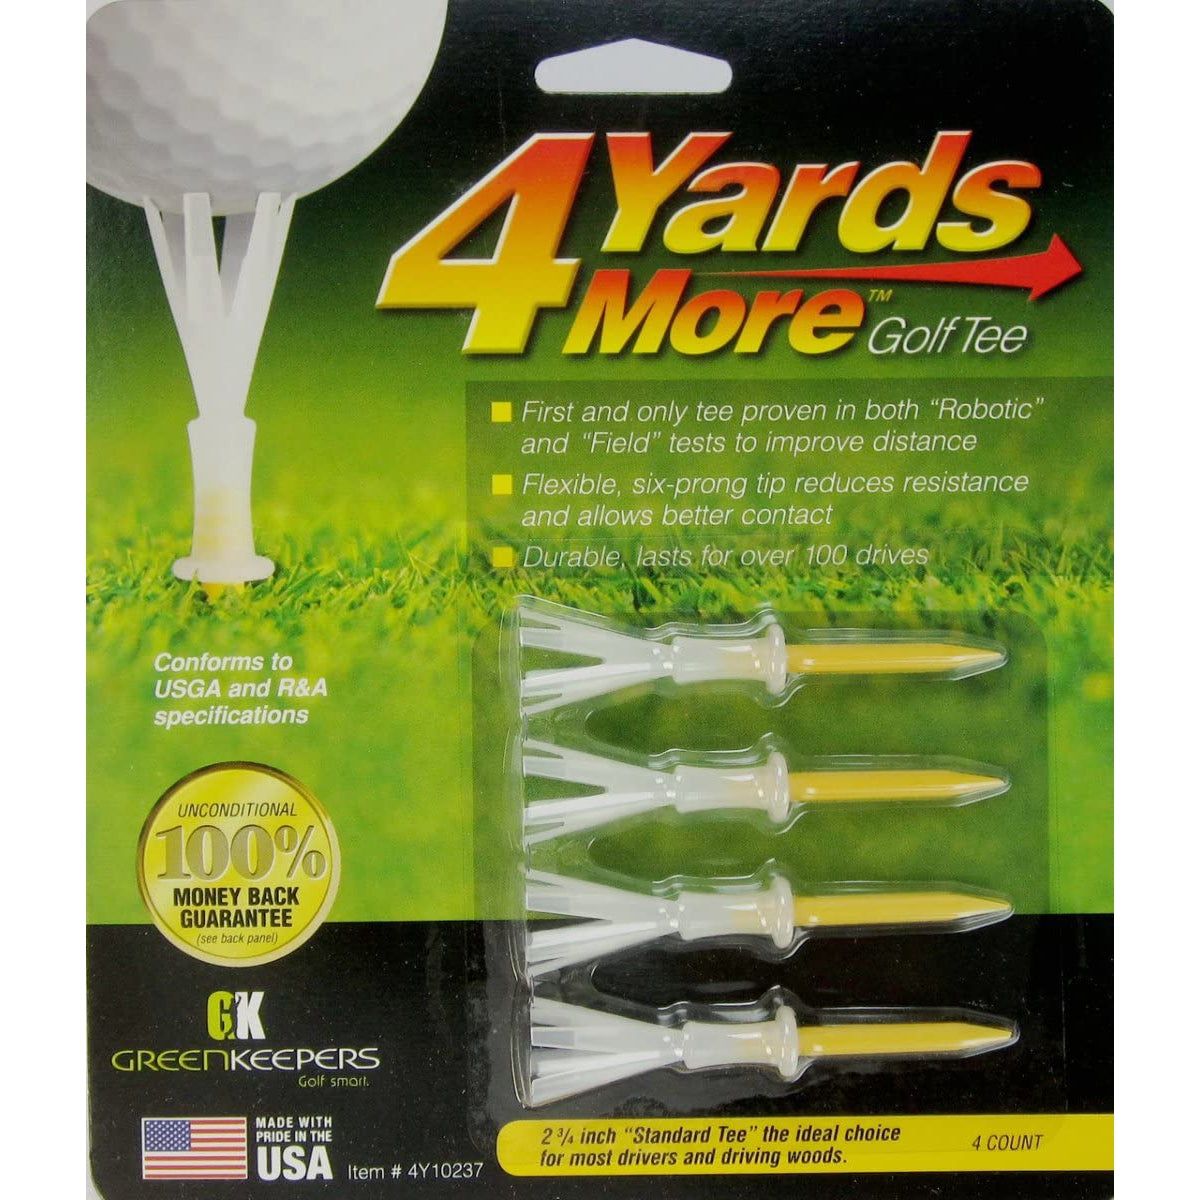 4 Yards More Golf Tee 2 3/4" - Yellow